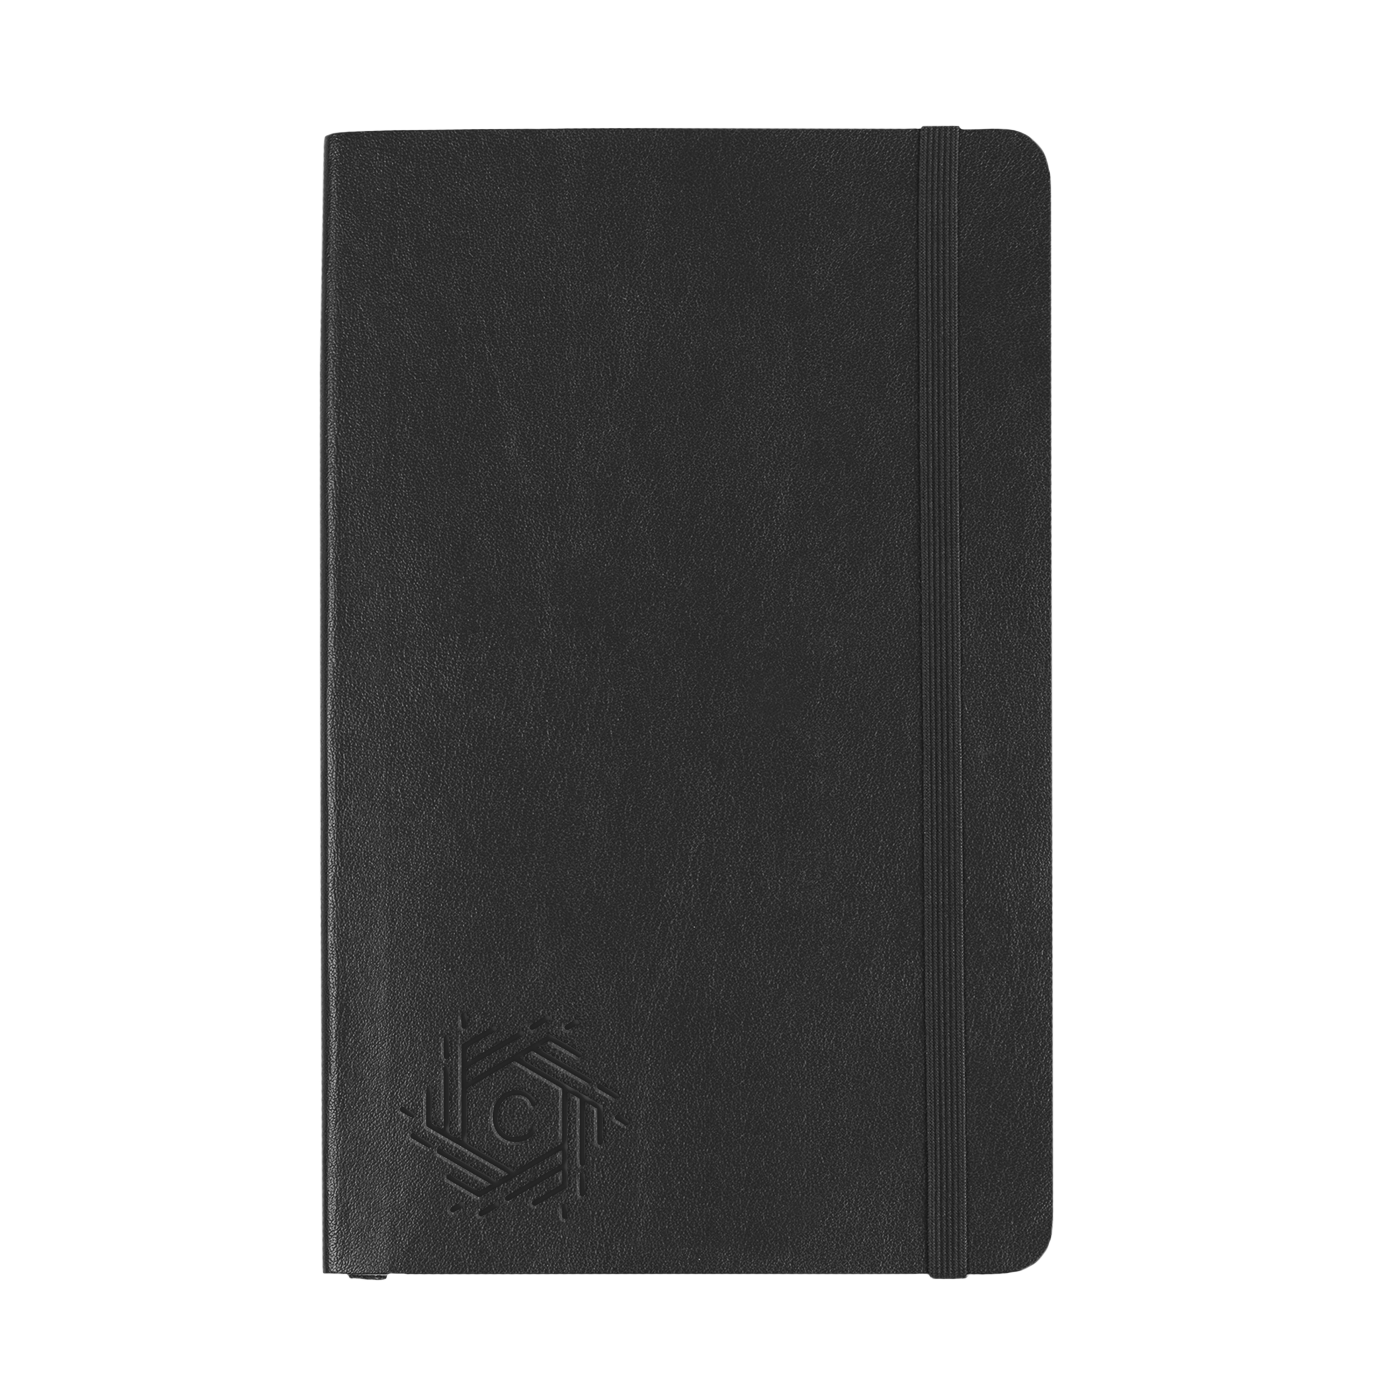 Moleskine Soft Cover Ruled Large Notebook - Black